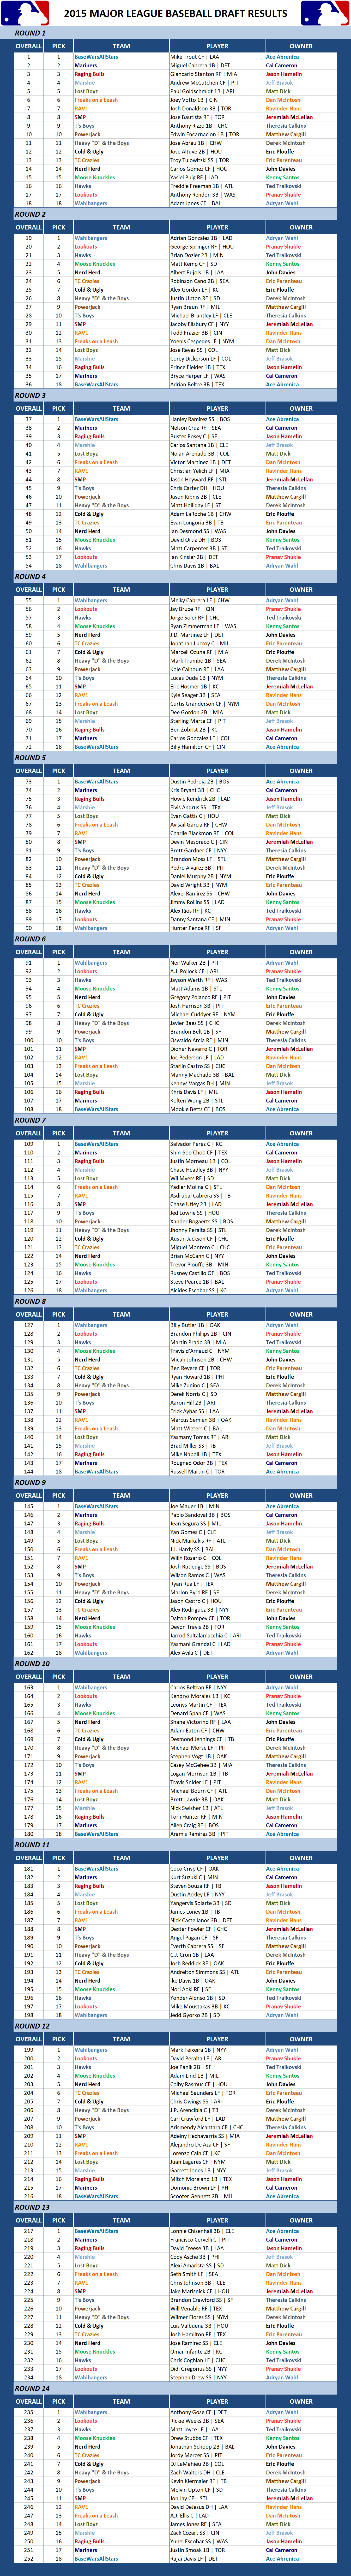 2015 Major league Baseball Draft Results